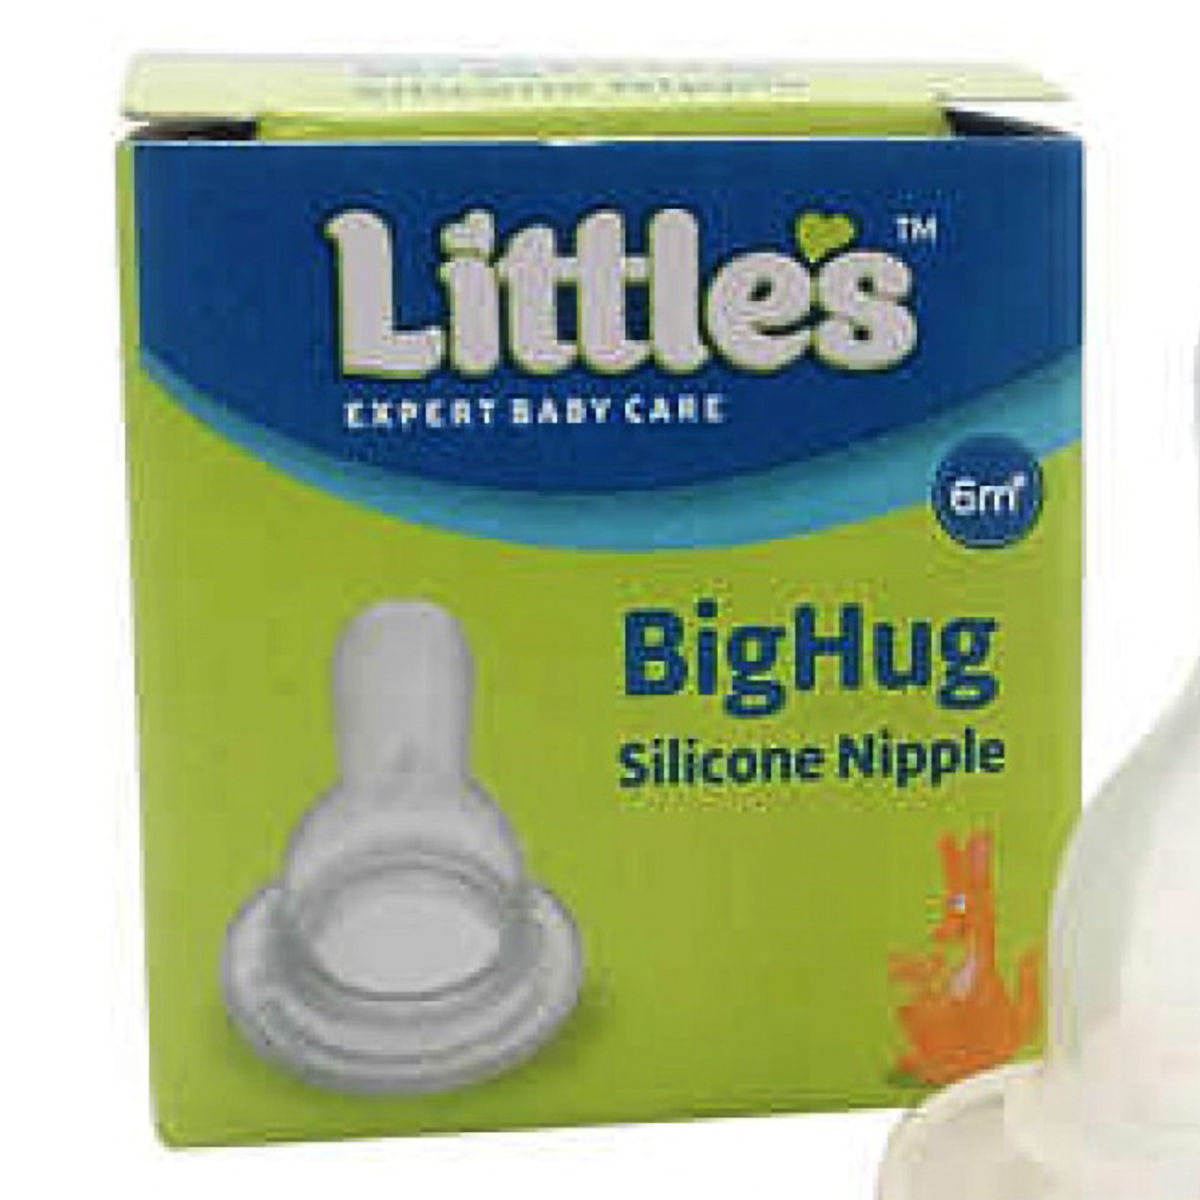 Buy Little's Big Hug Silicon Nipple 6M+, 1 Count Online